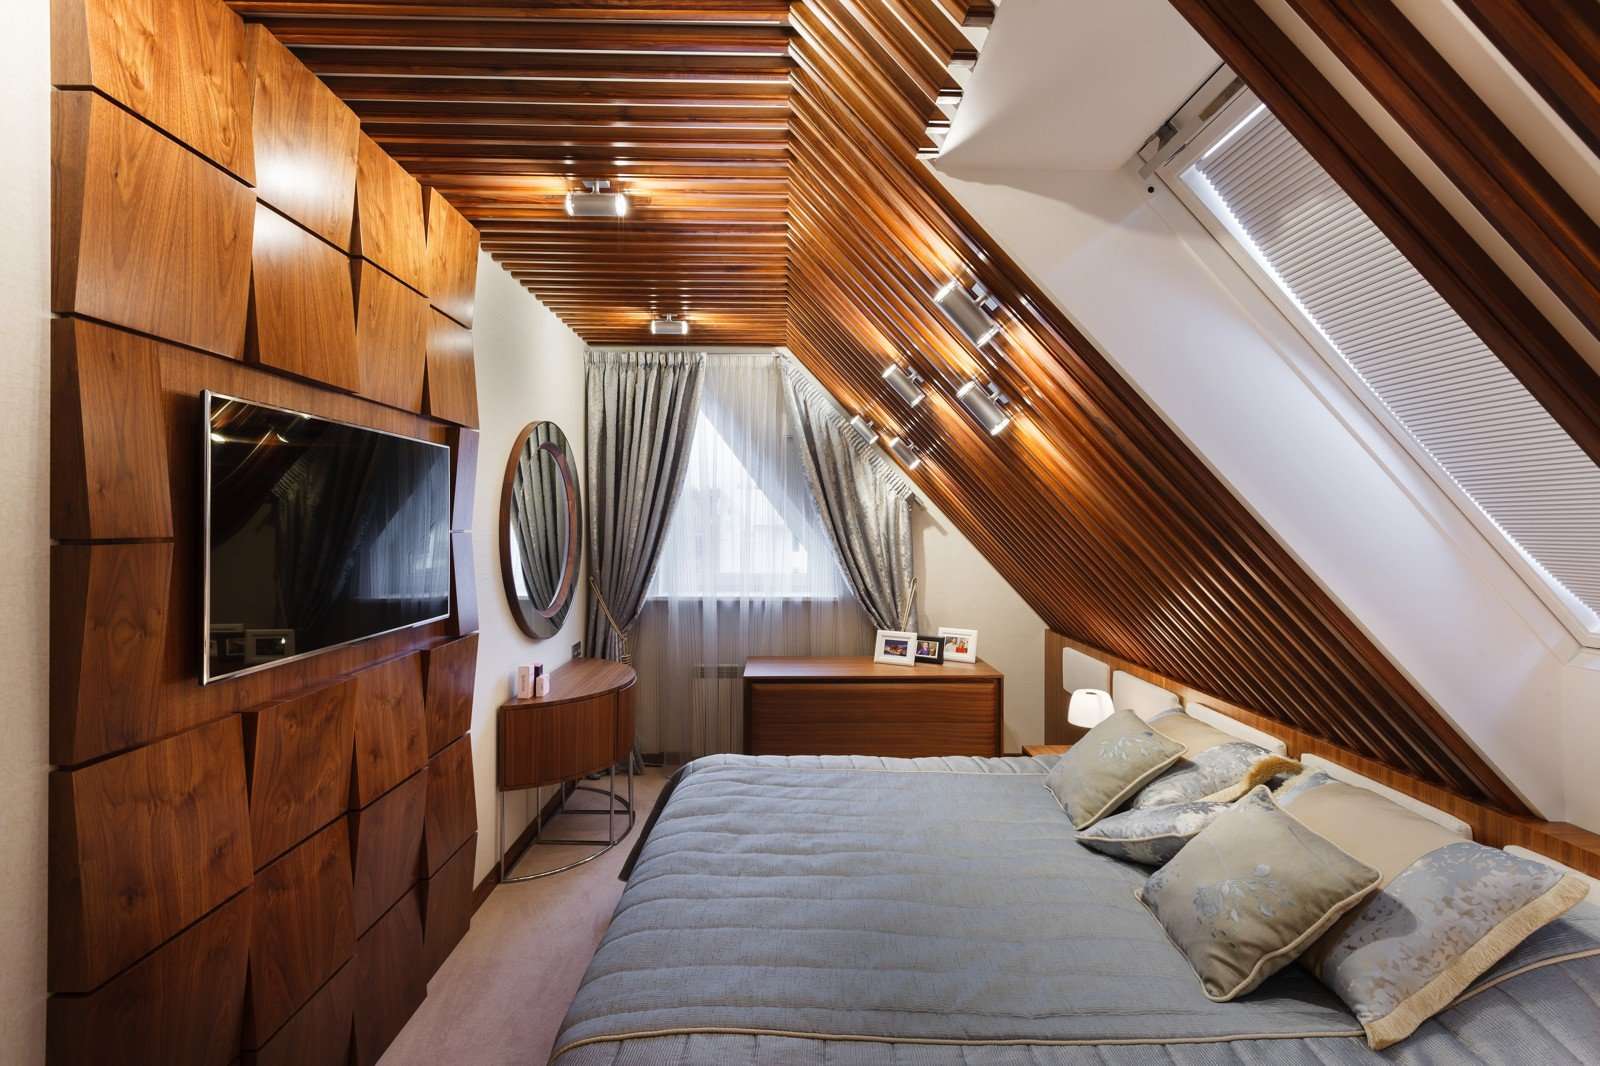 Мансарда материалы. Спальня на мансарде. Деревянная мансарда интерьер. Спальня в деревянной мансарде. Спальня на мансардном этаже.